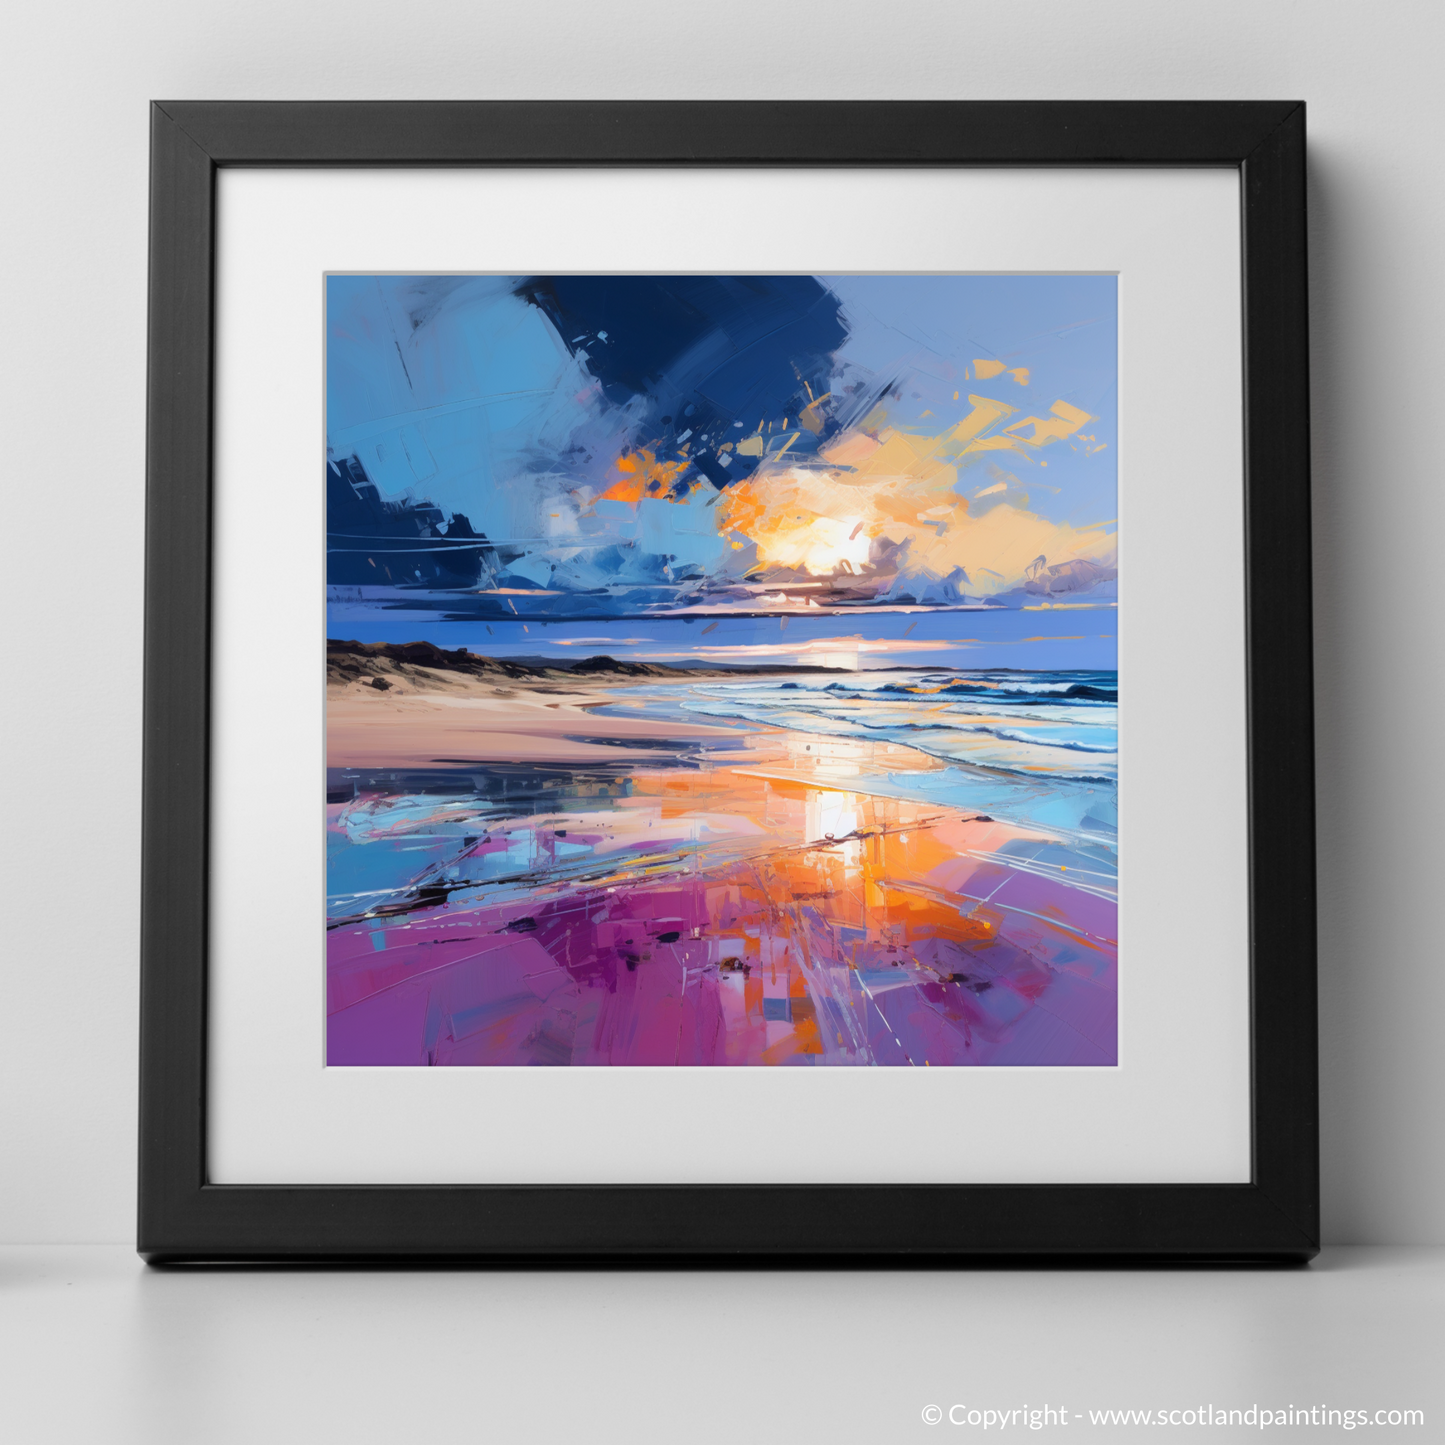 Art Print of Balmedie Beach at dusk with a black frame